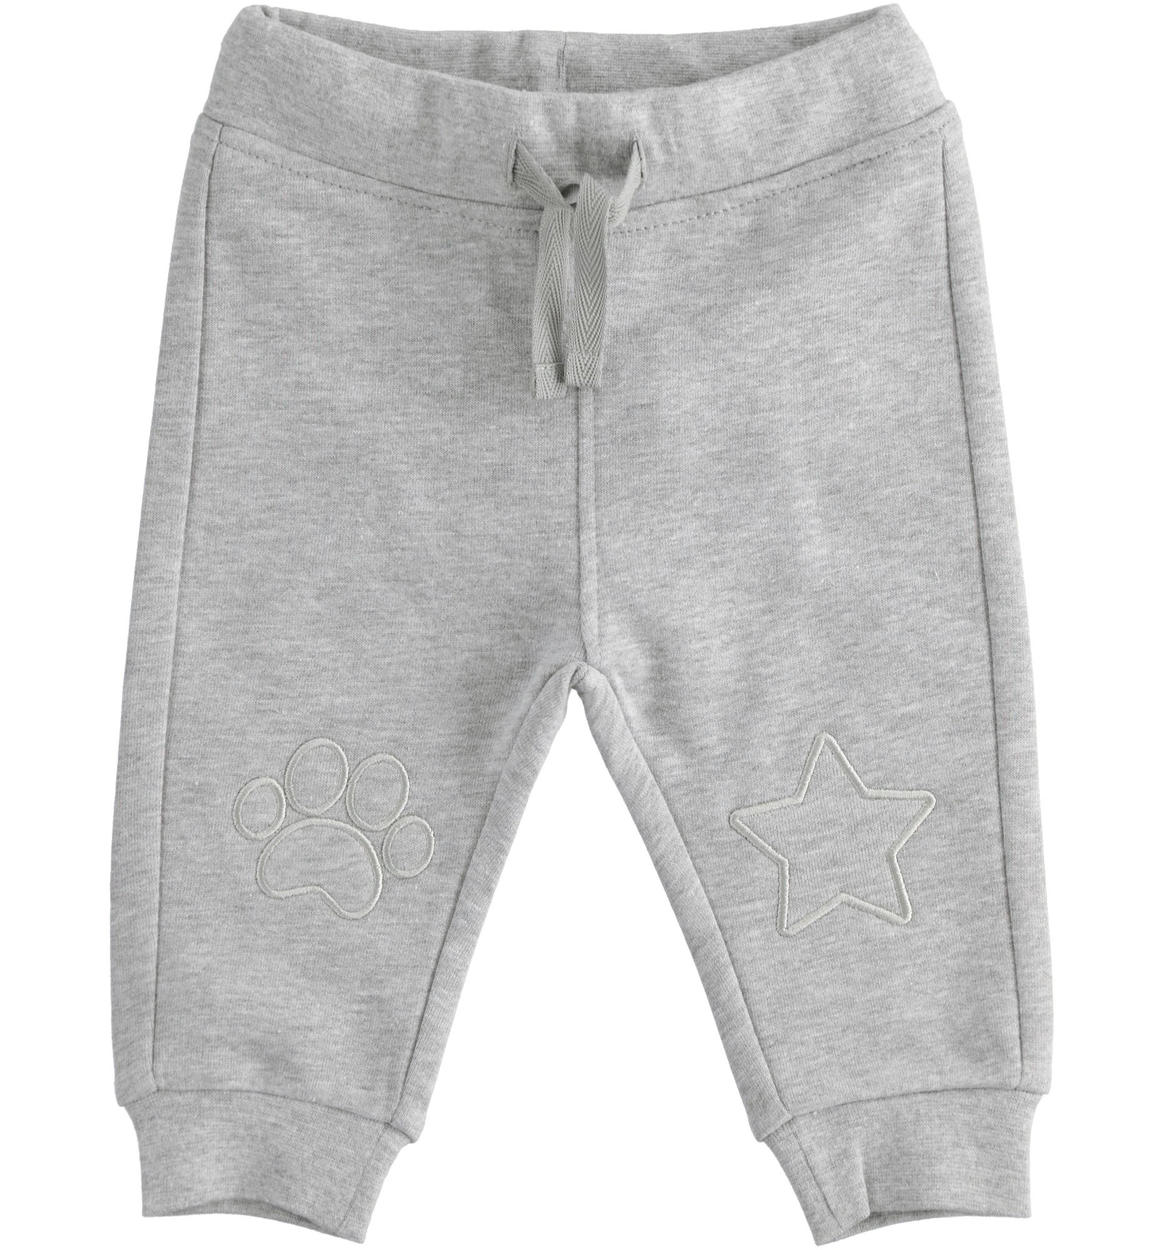 Pantalone in felpa invernale con toppe per bambino da 0 a 18 mesi iDO -  PANTALONI - Bambino - iDO